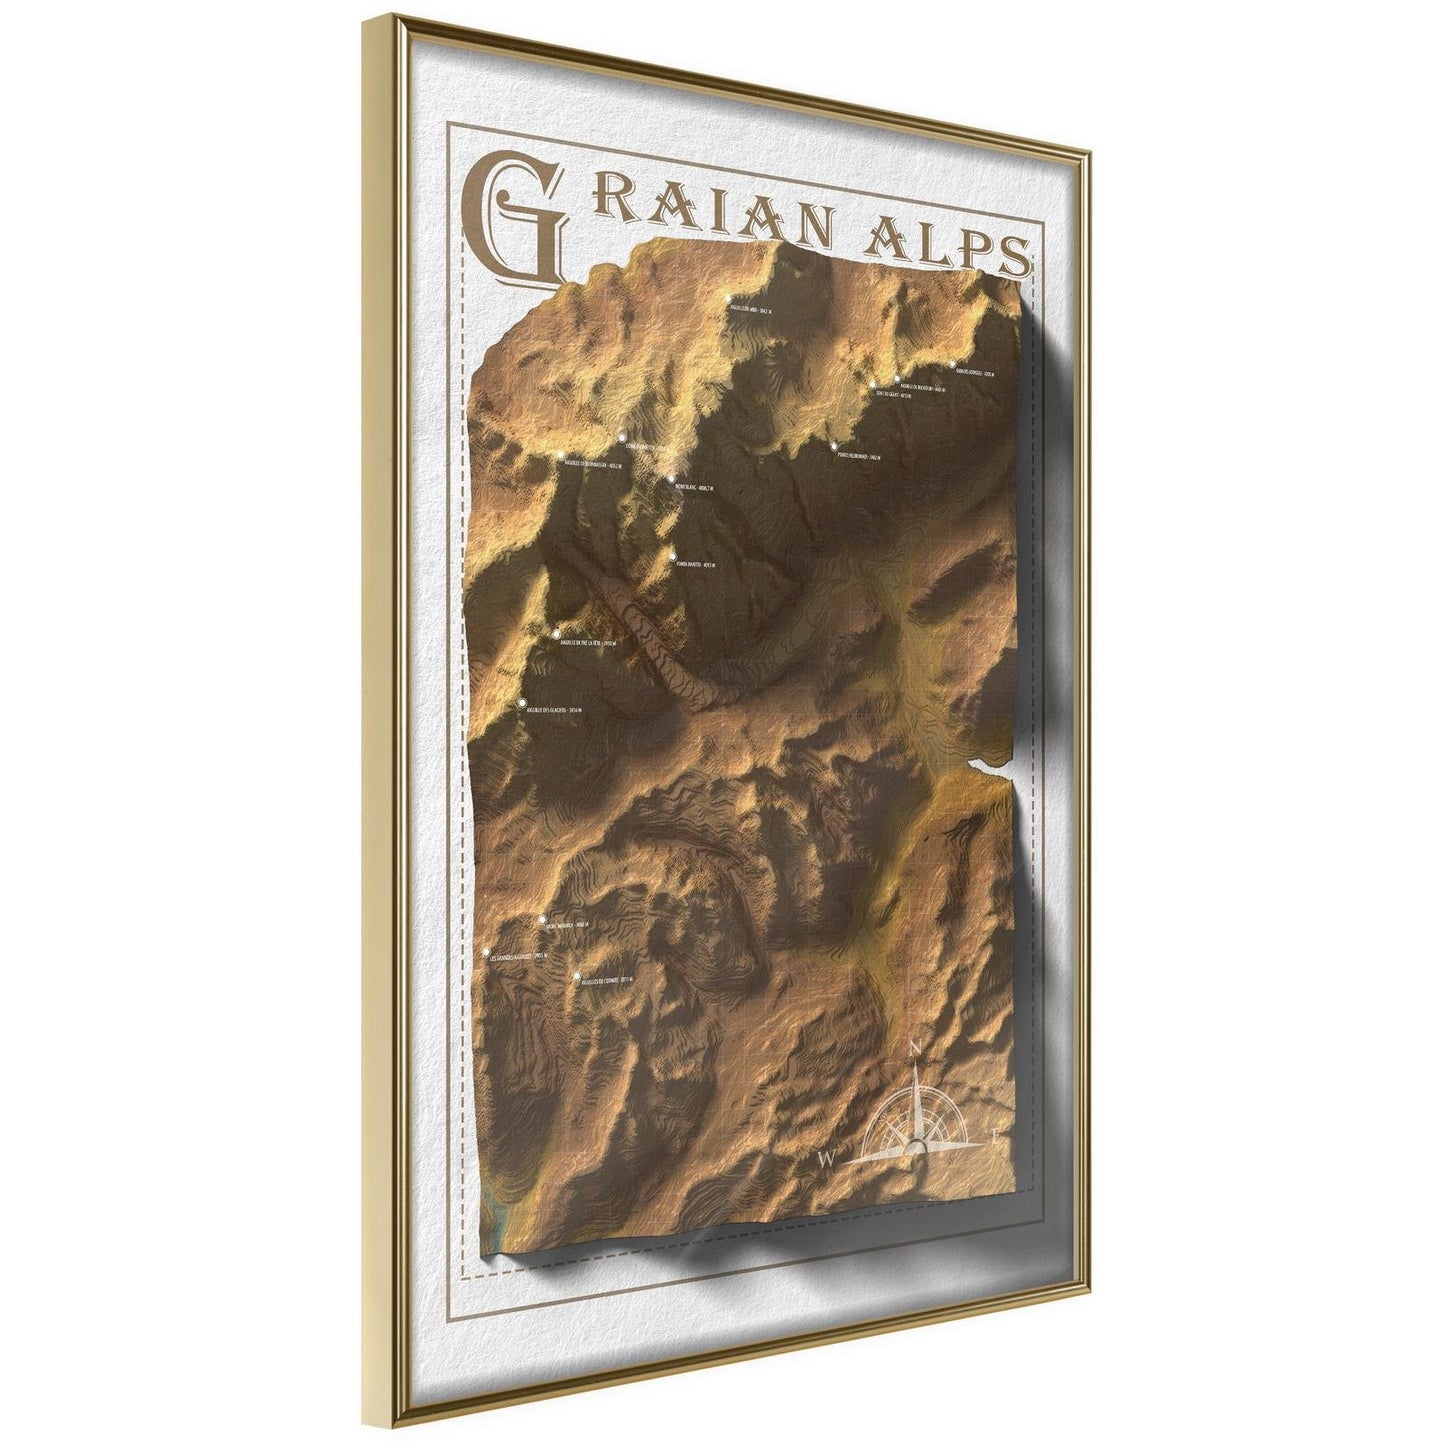 Raised Relief Map: Graian Alps